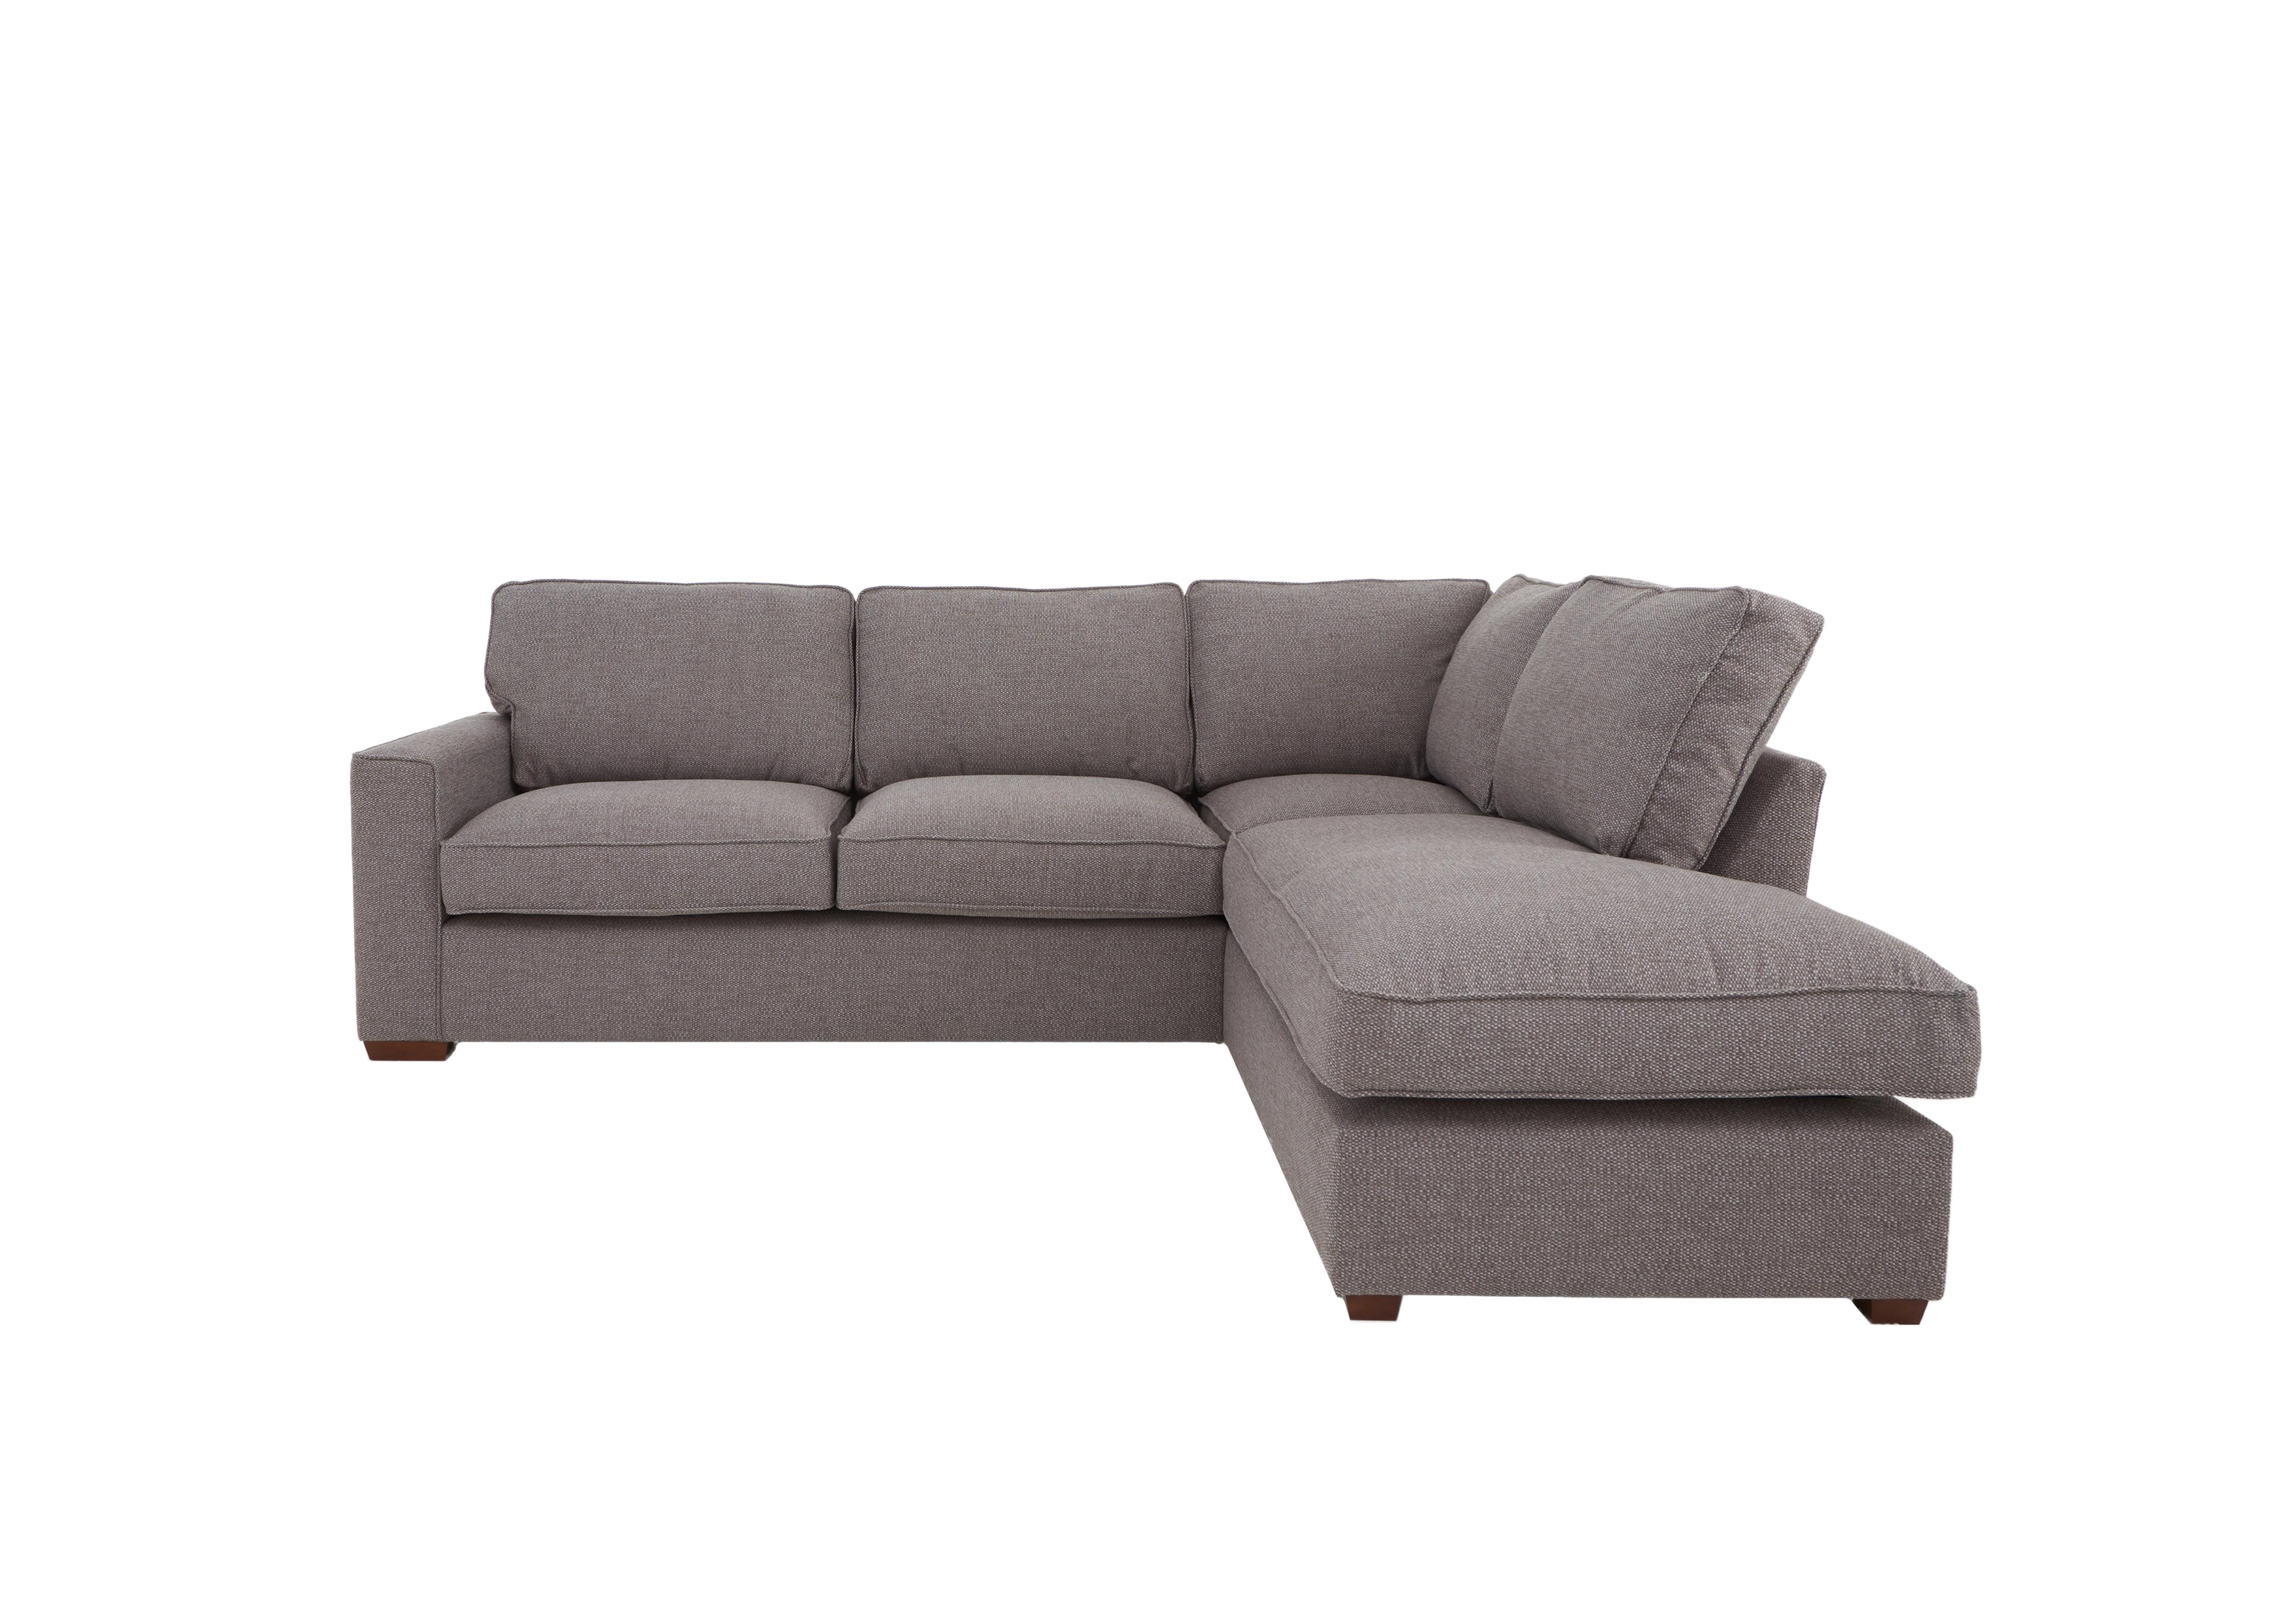 Cory Fabric Corner Chaise Classic Back Sofa in Dallas Taupe on Furniture Village